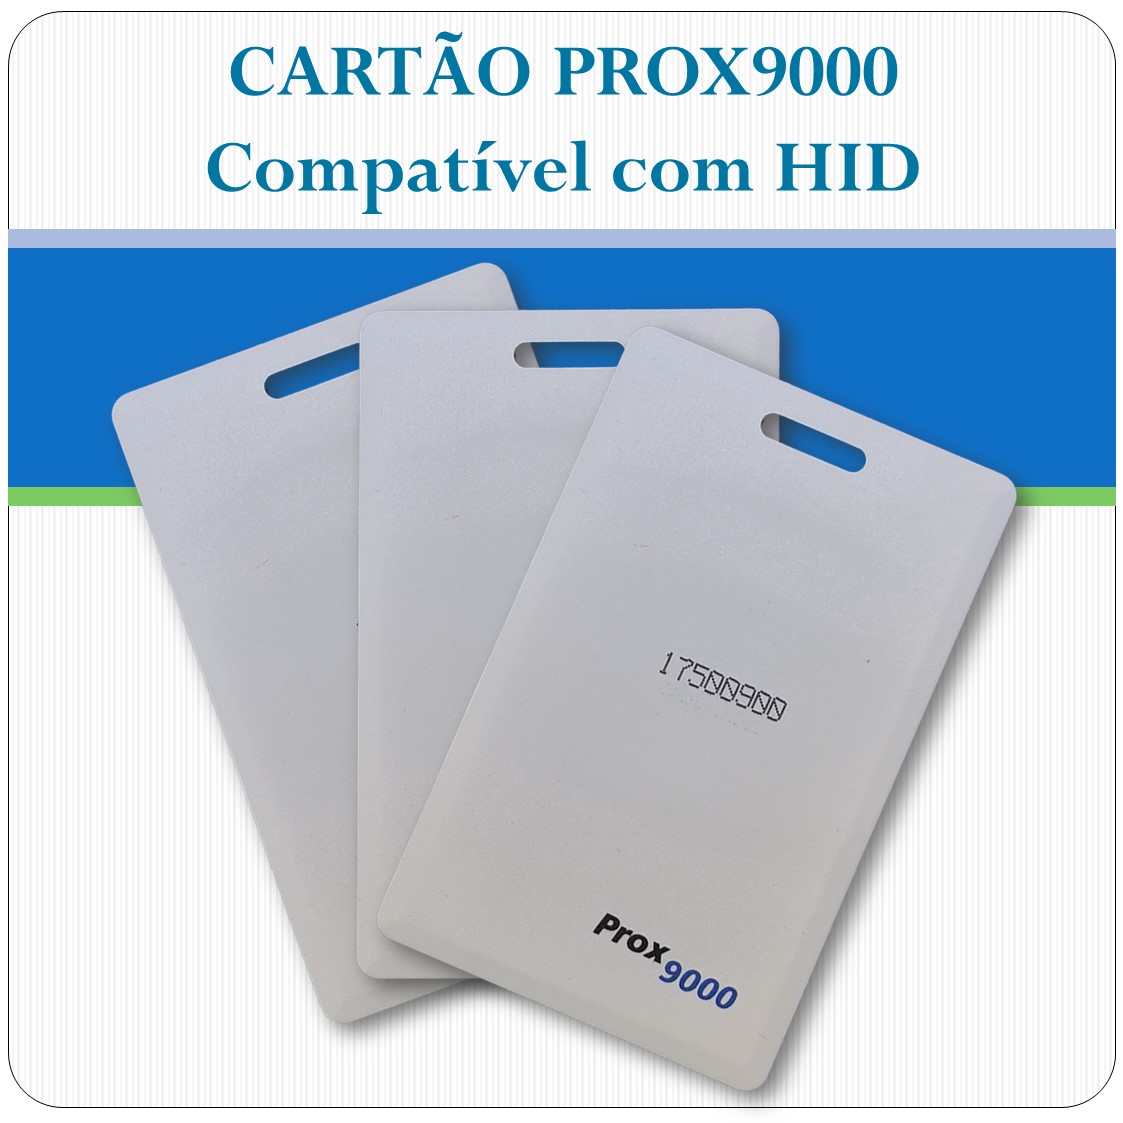 Cartão Rfid Prox9000 Compativel Hid